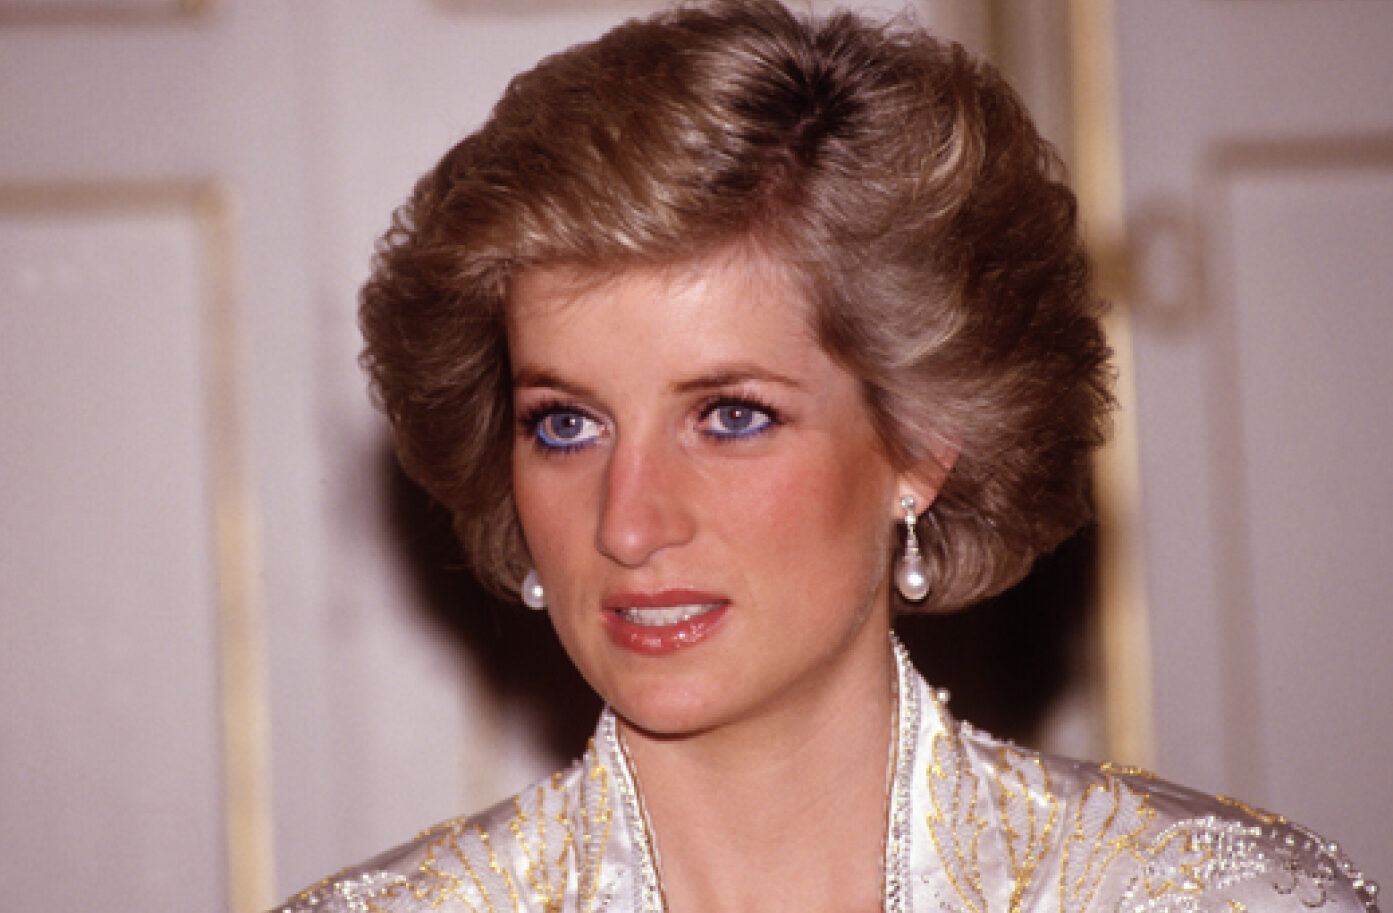 Modern Diana Bob : La coupe de la princesse Diana fait son grand retour